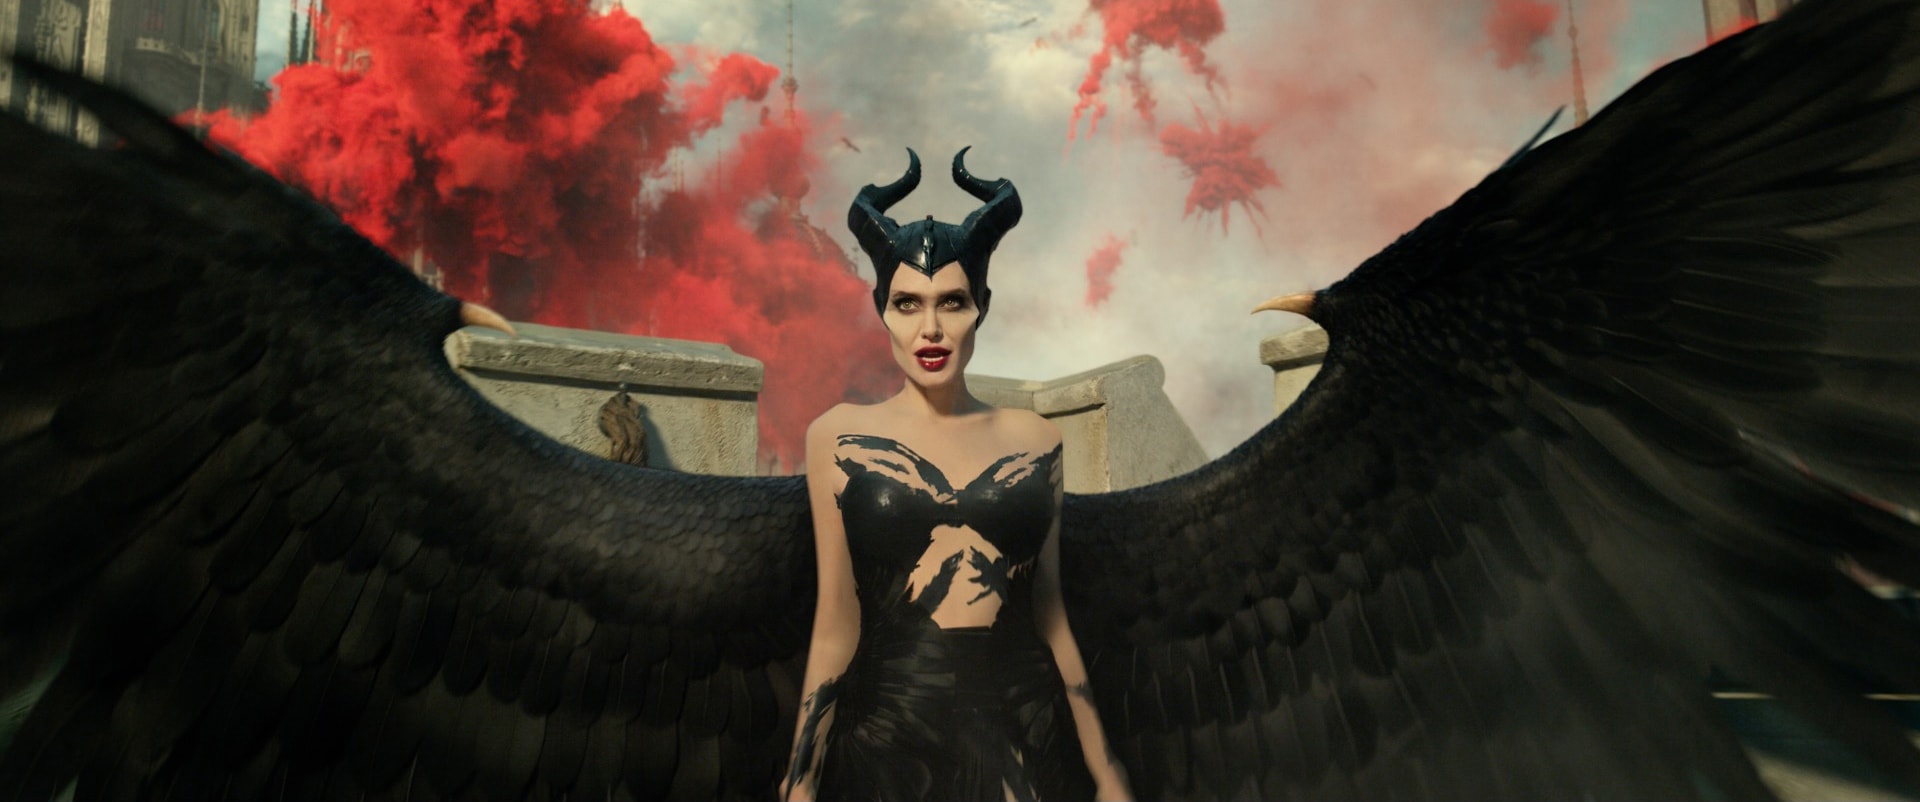 Maleficent Mistress Of Evil Full TrailerMaleficent Mistress Of Evil Full Trailer